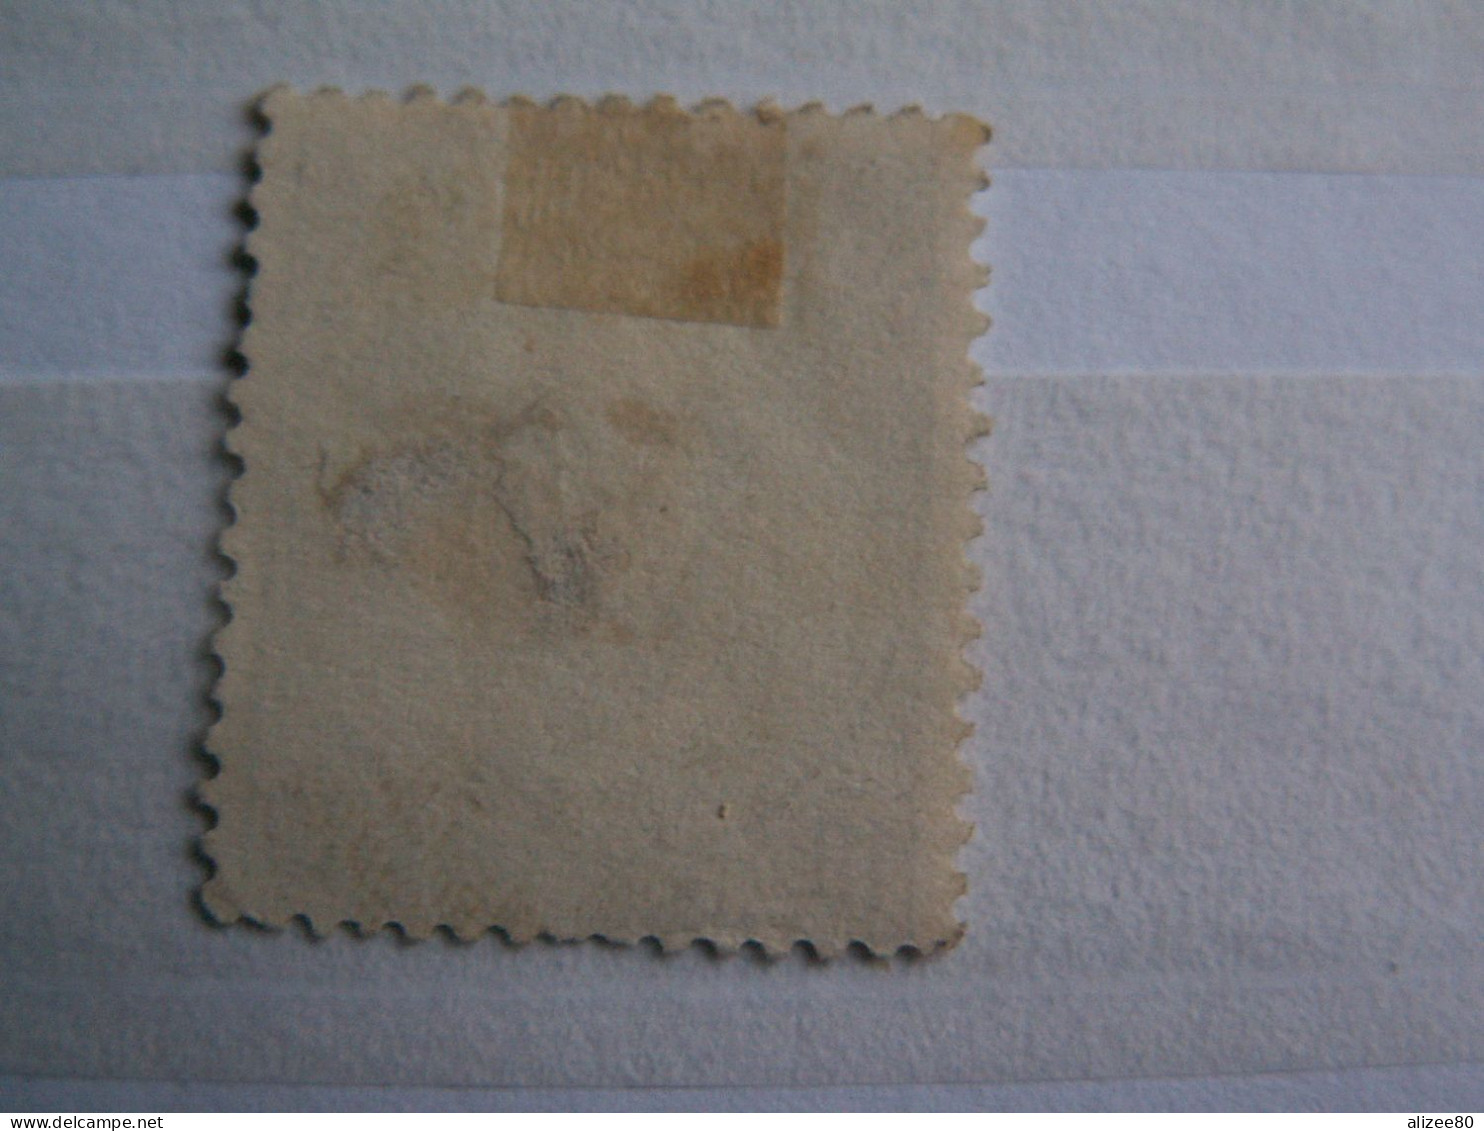 EMPIRE // ESPAGNE  --1872  AMEDEE 1è - 10 C Outremer  --  Trace Charnière     Cote 8 Euro - Unused Stamps